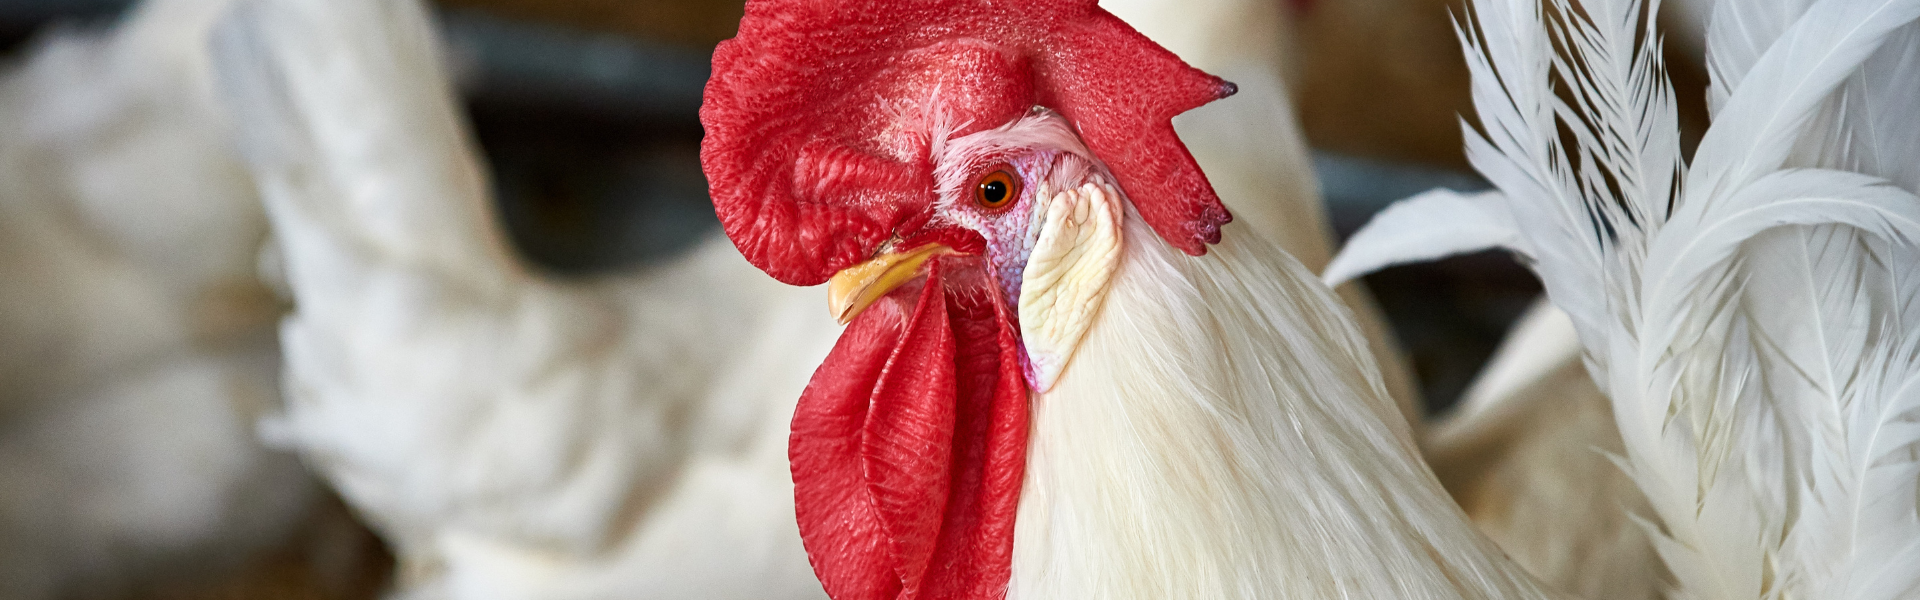 Close-up view of a white leghorn chicken